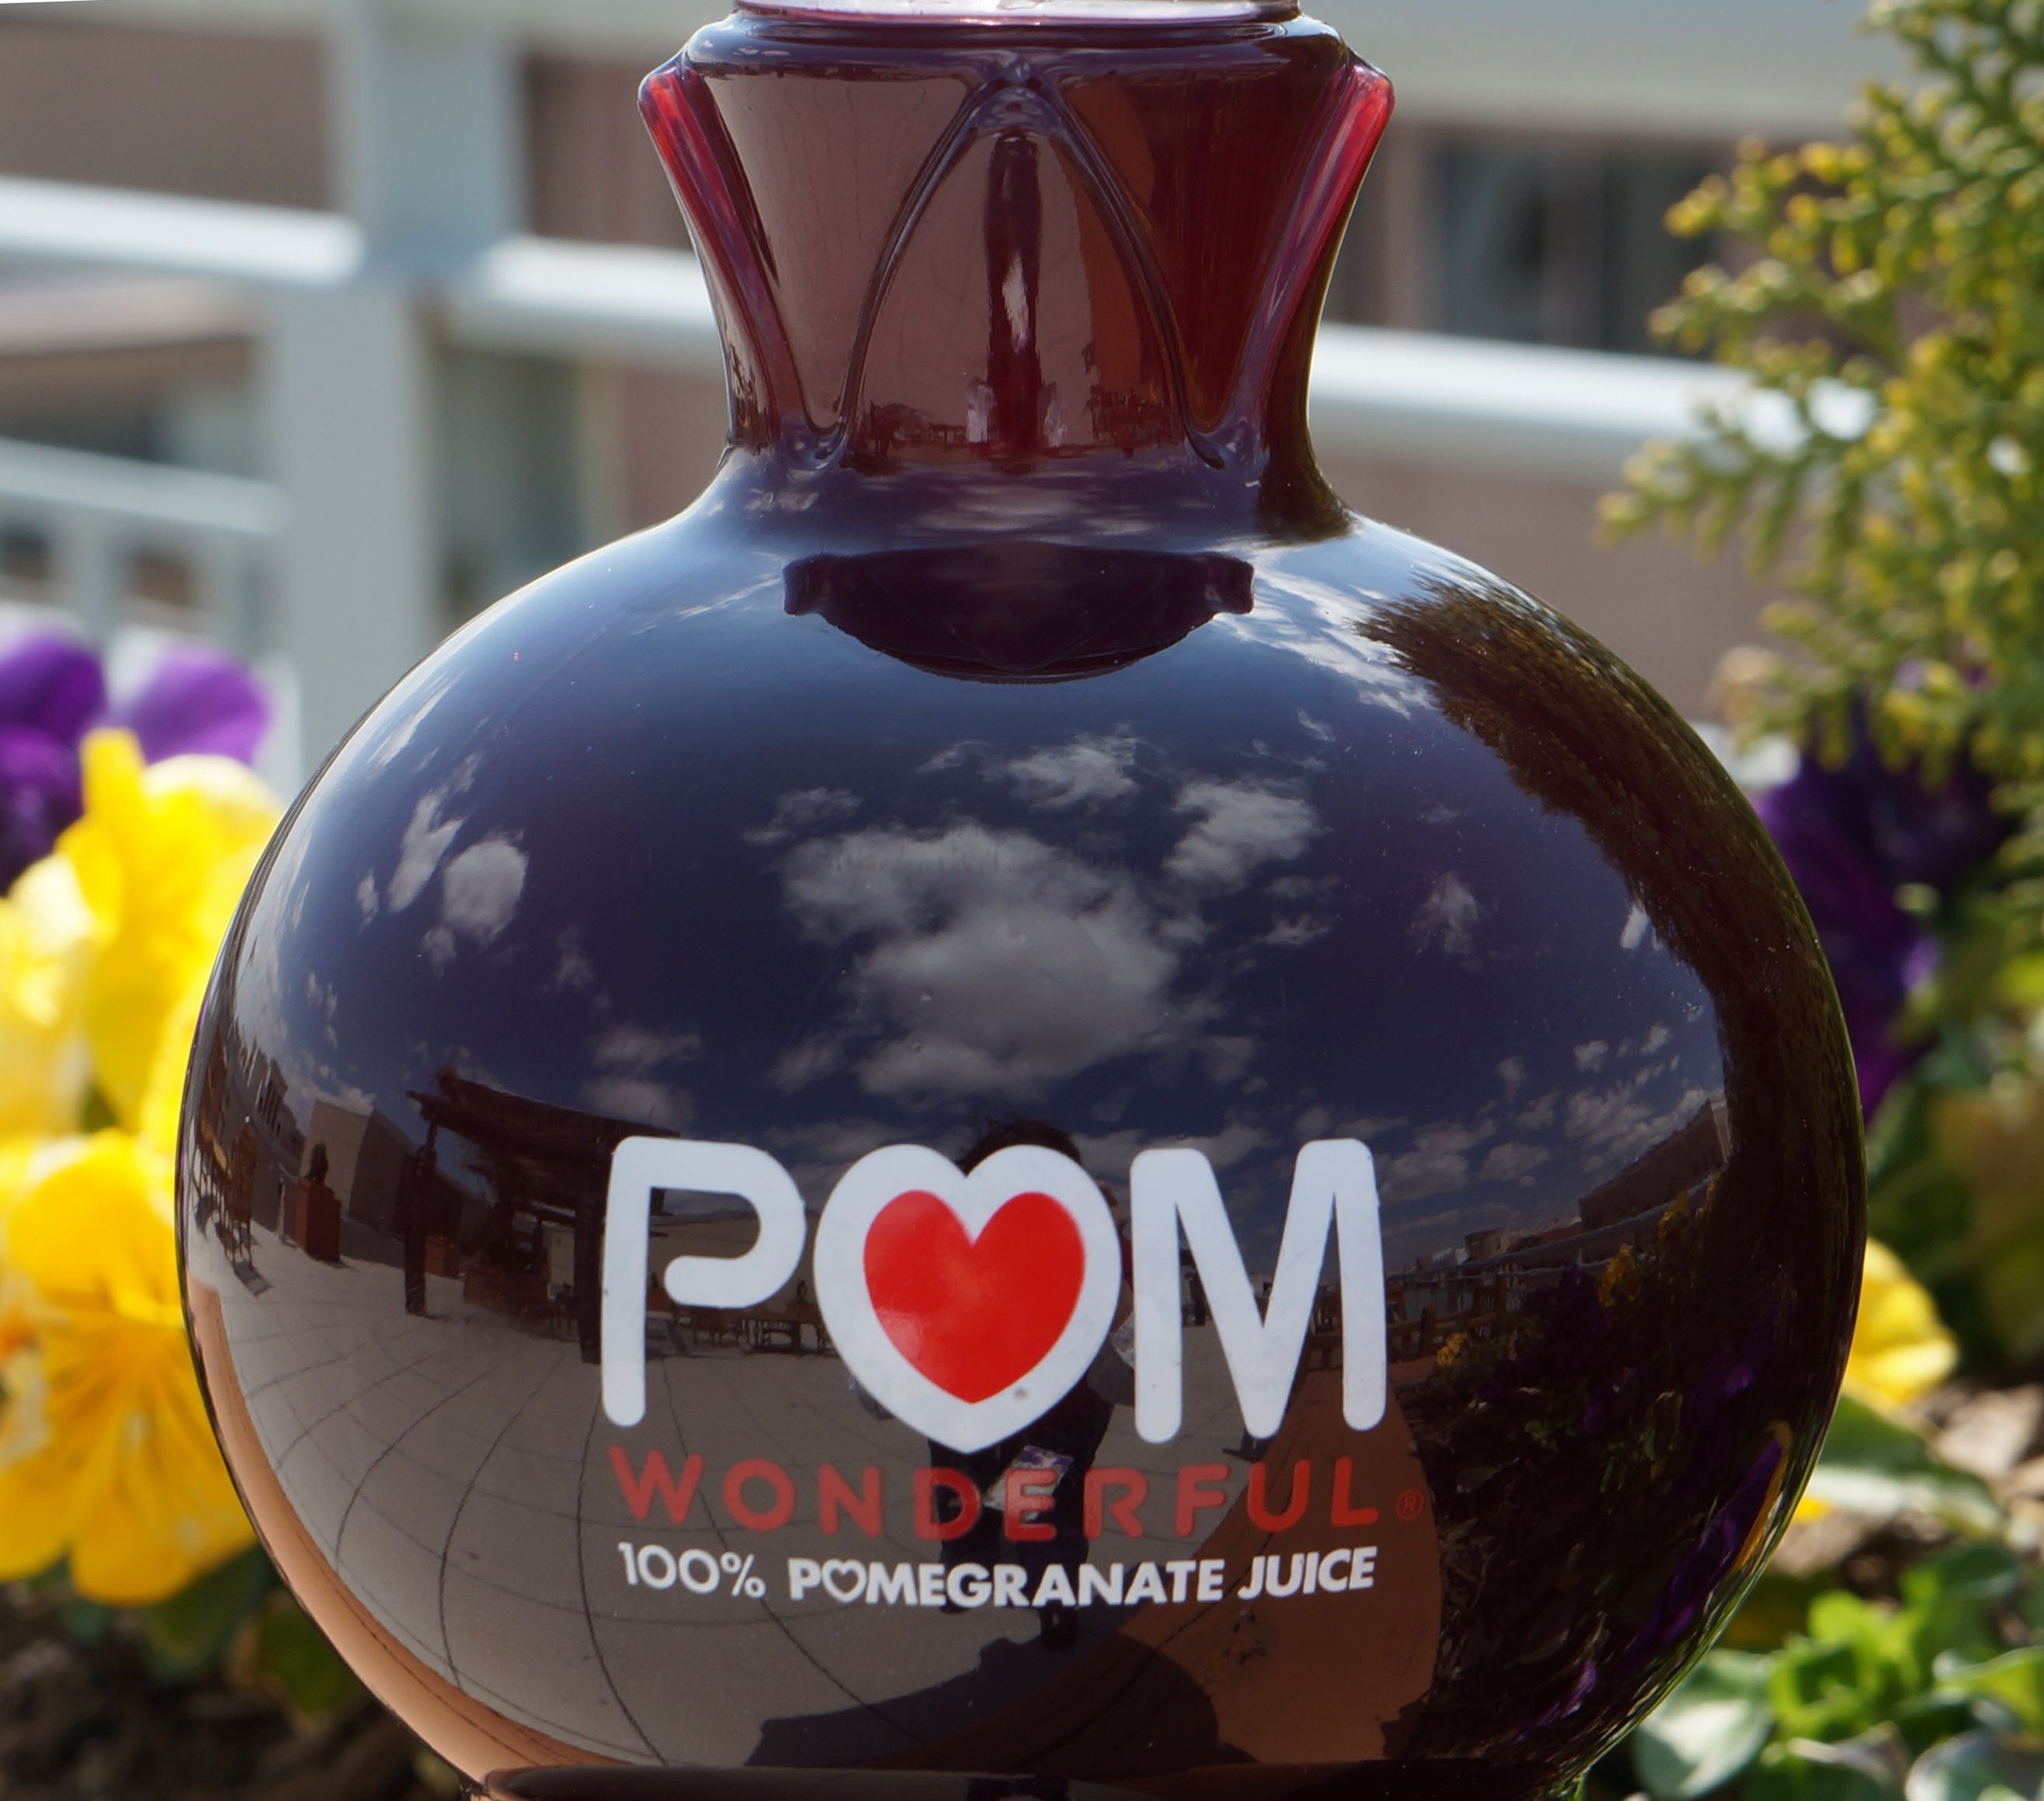 POM Wonderful's 100% Pomegranate Juice